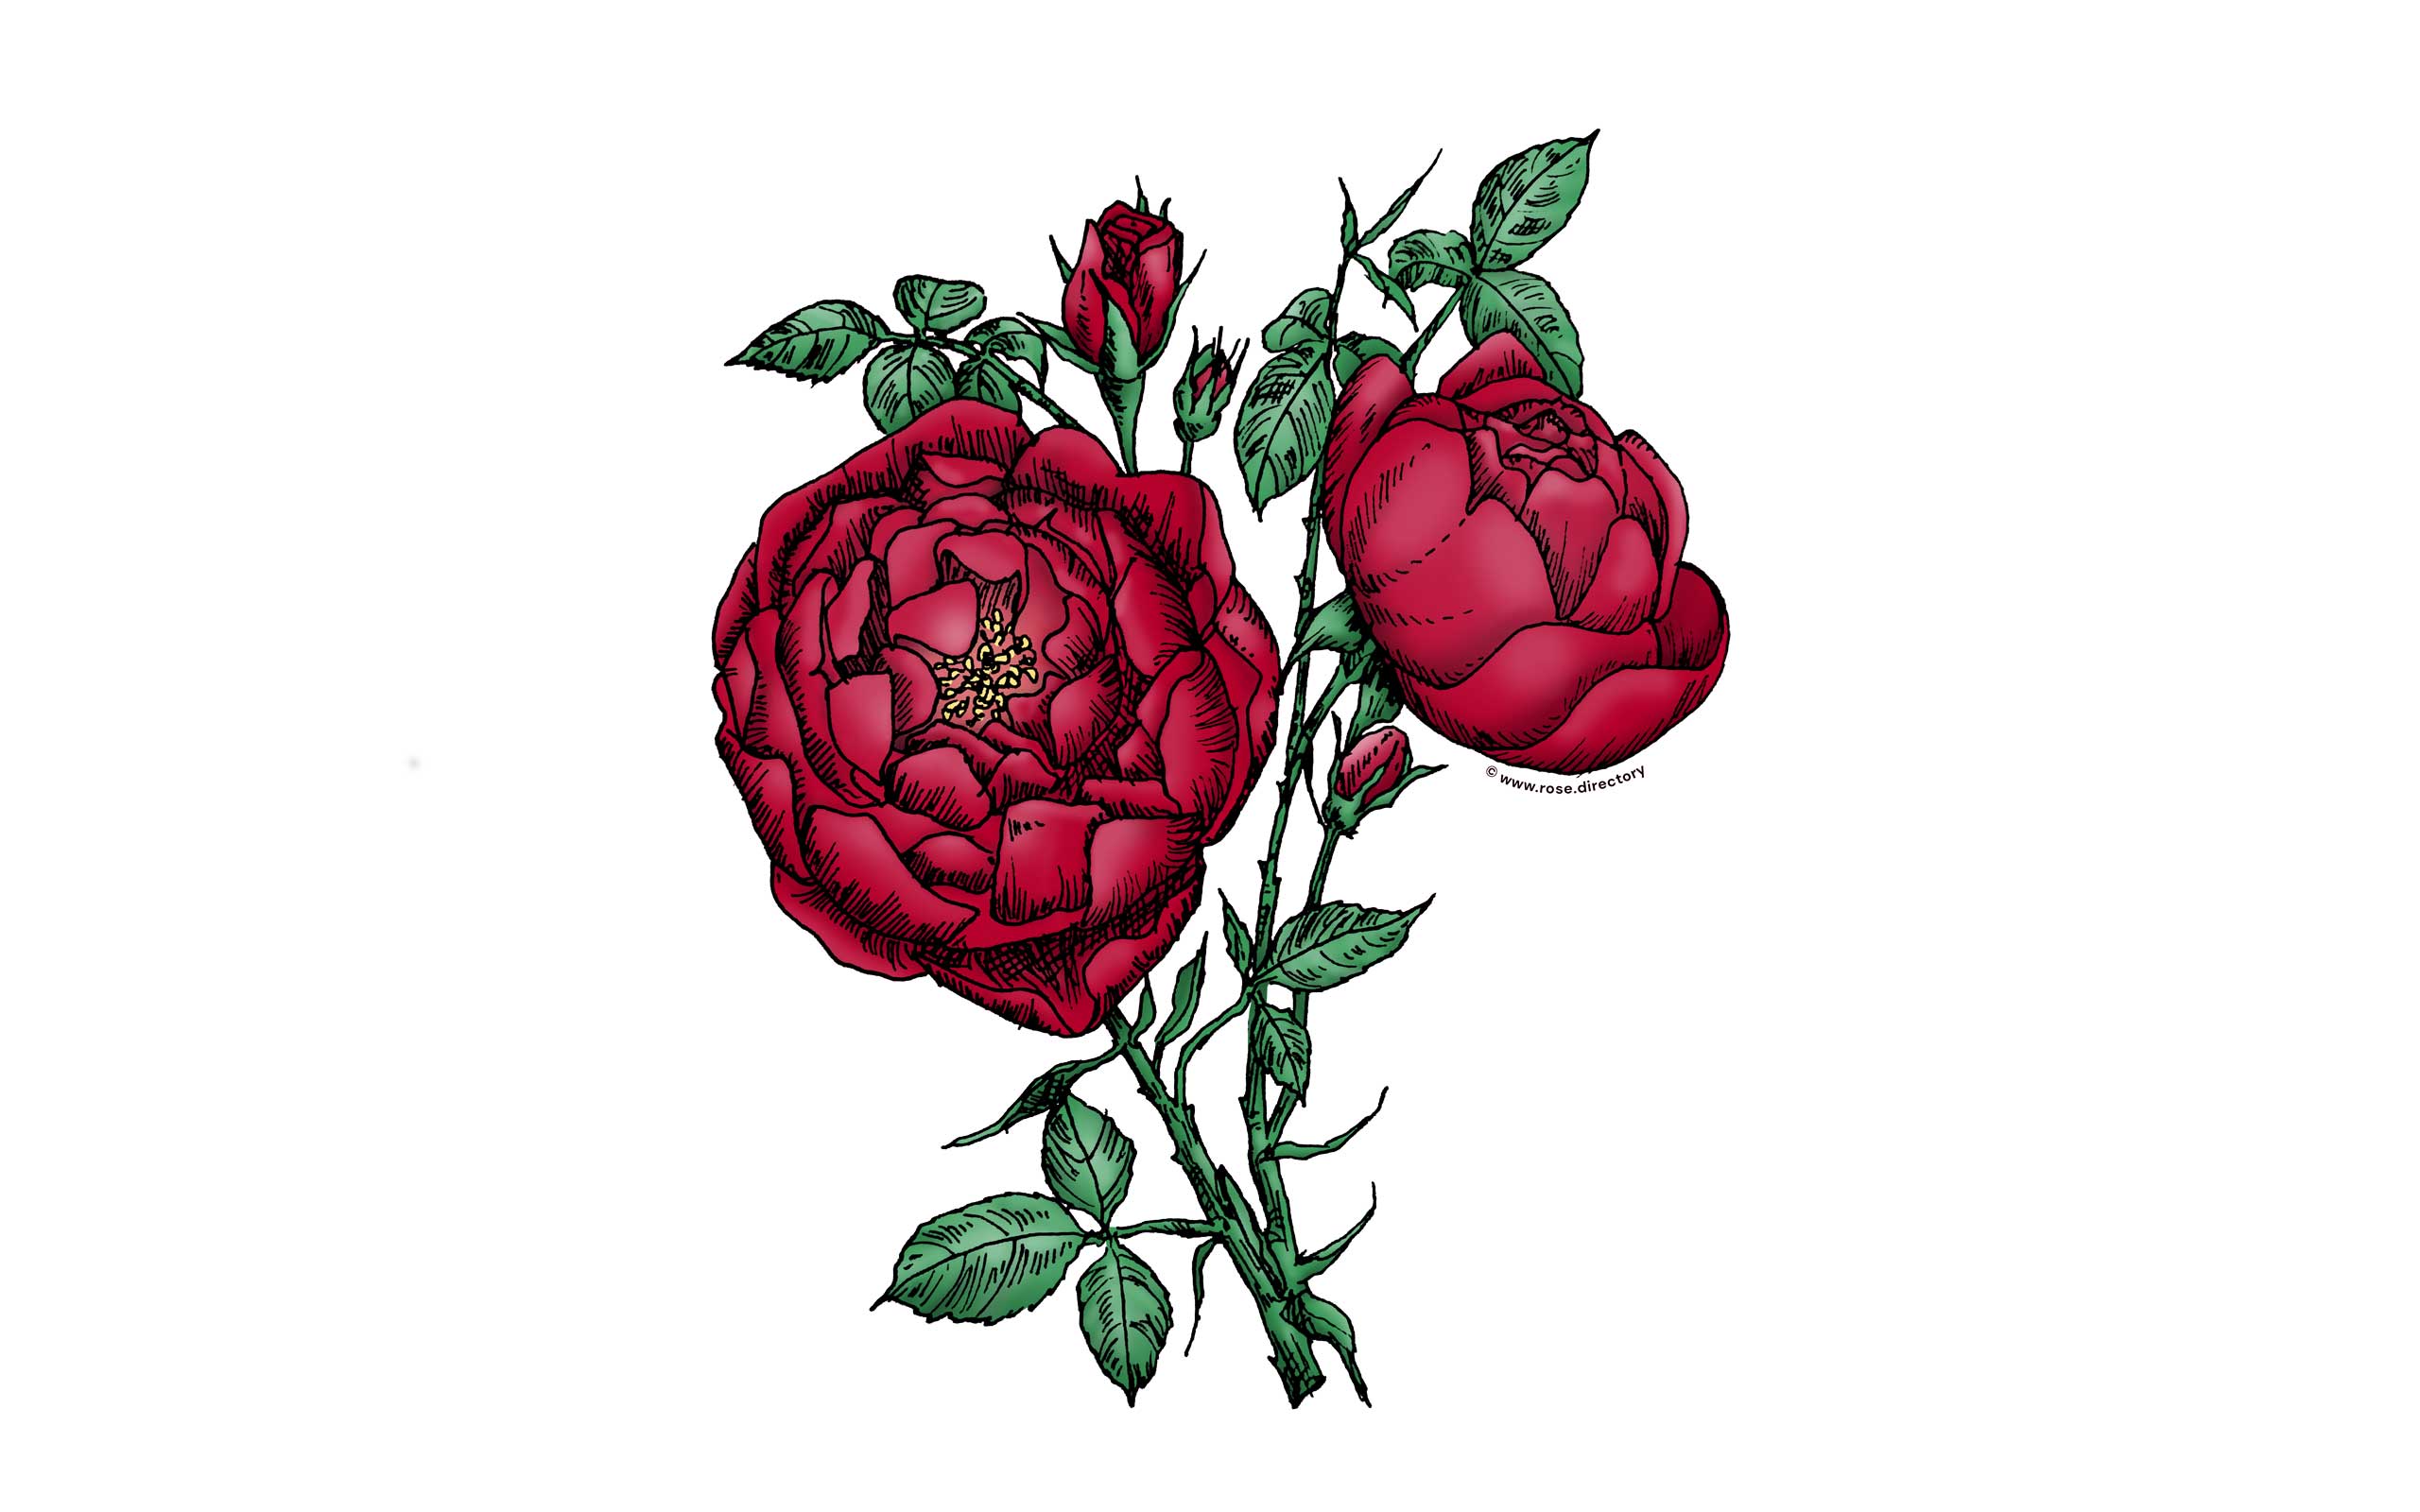 Dark Red Cupped Rose Bloom Full 26-40 Petals In 3+ Rows